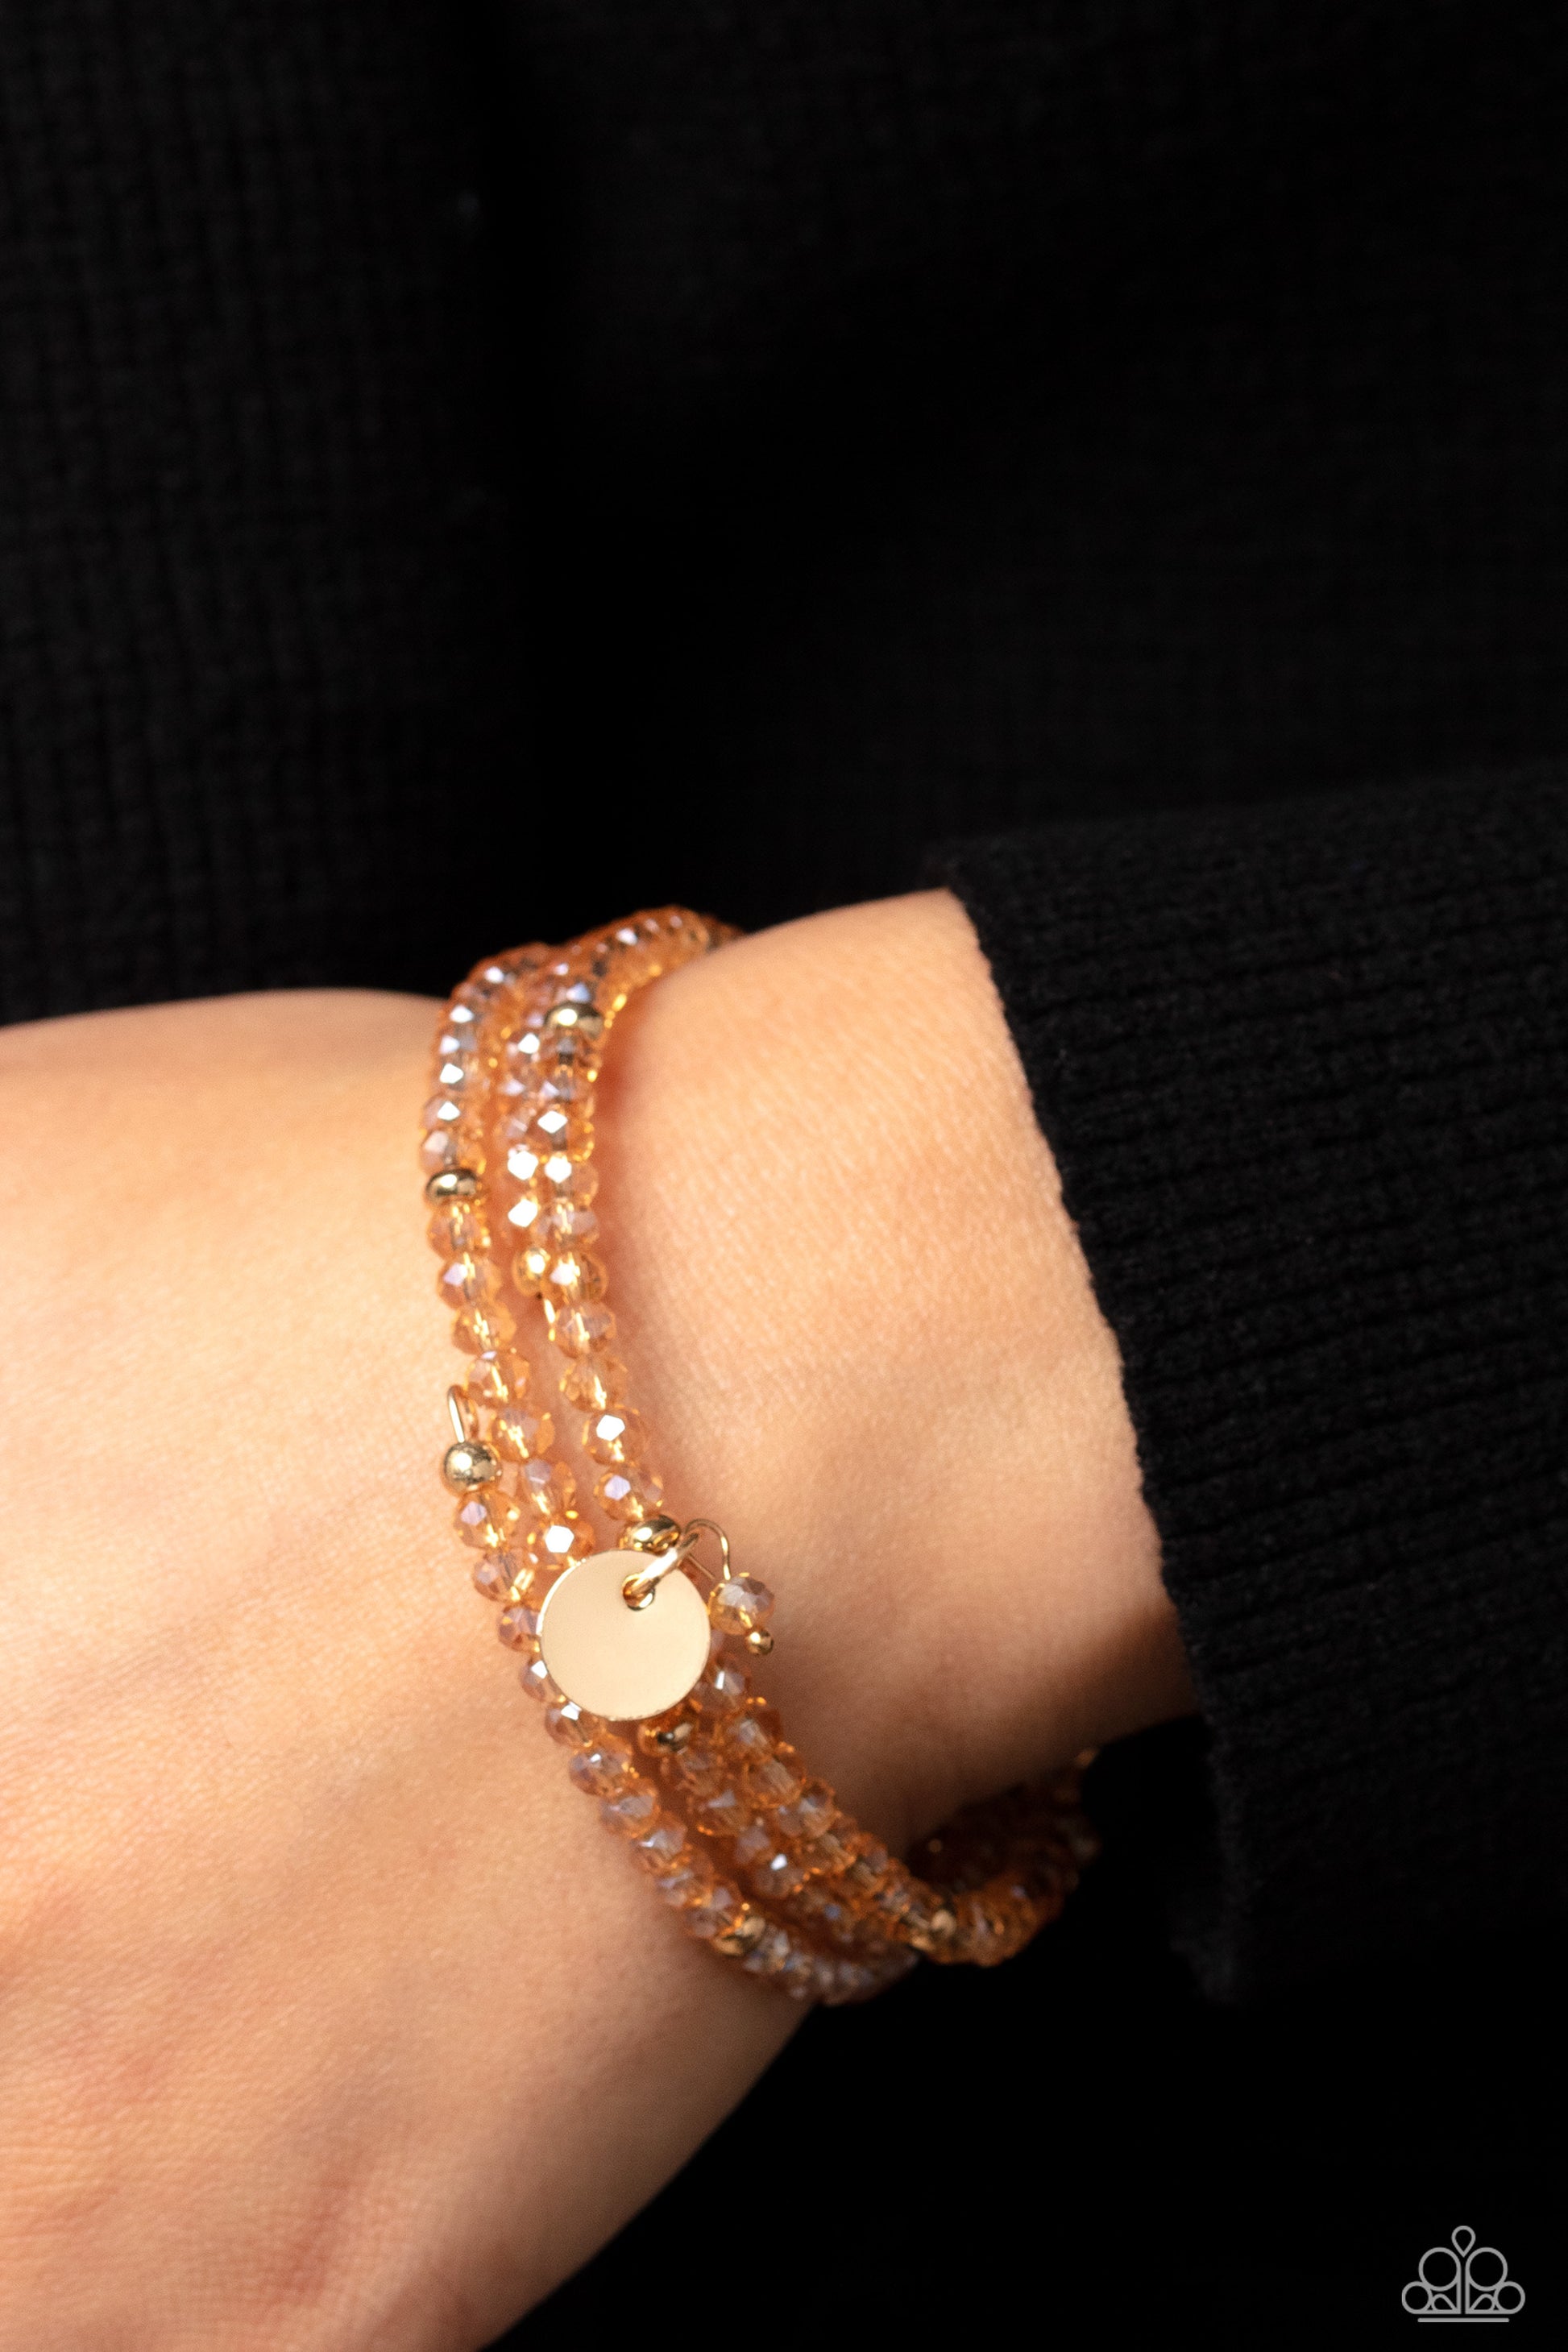 Illusive Infinity - Gold Bracelet - Cute Bracelets Paparazzi jewelry images